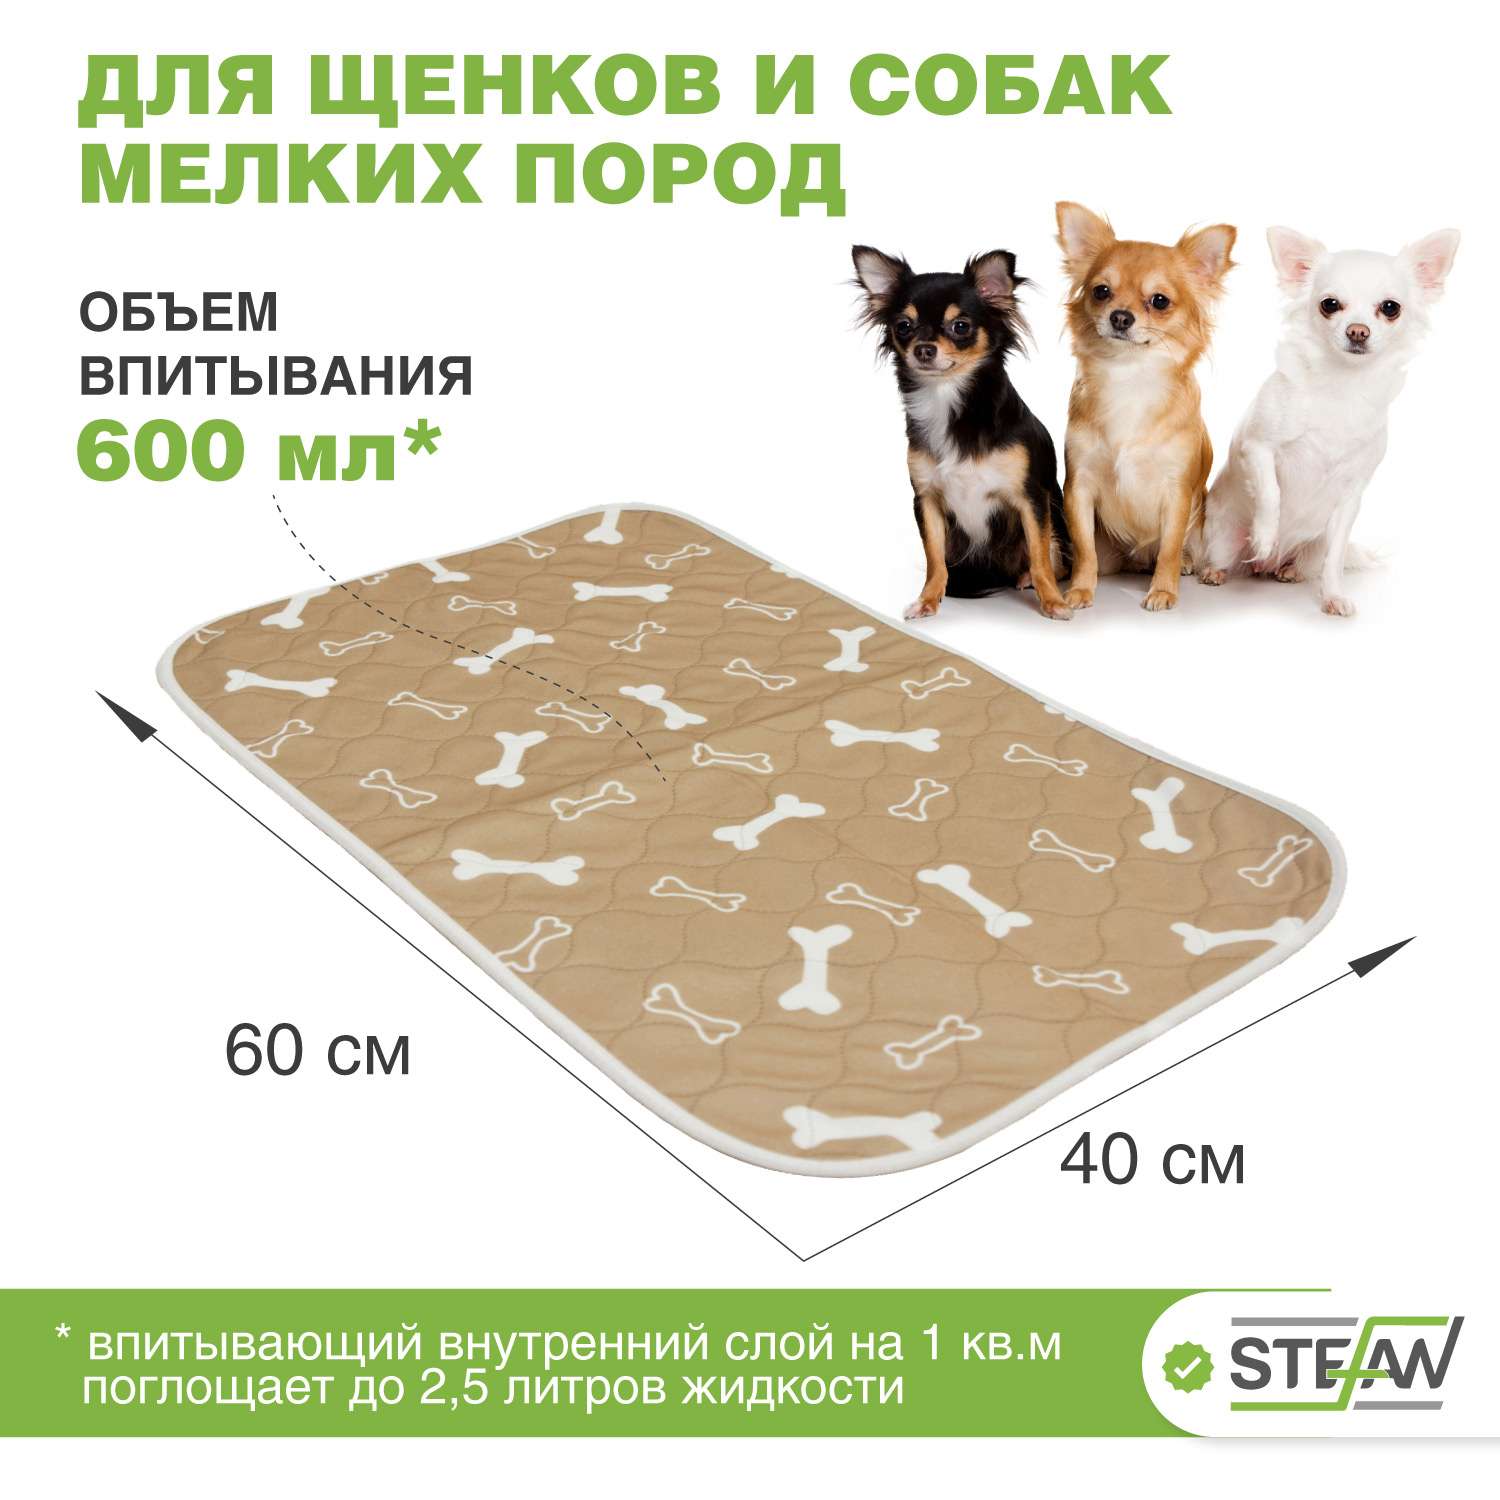 Пеленка для животных Stefan впитывающая многоразовая бежевая 40х60см - фото 2